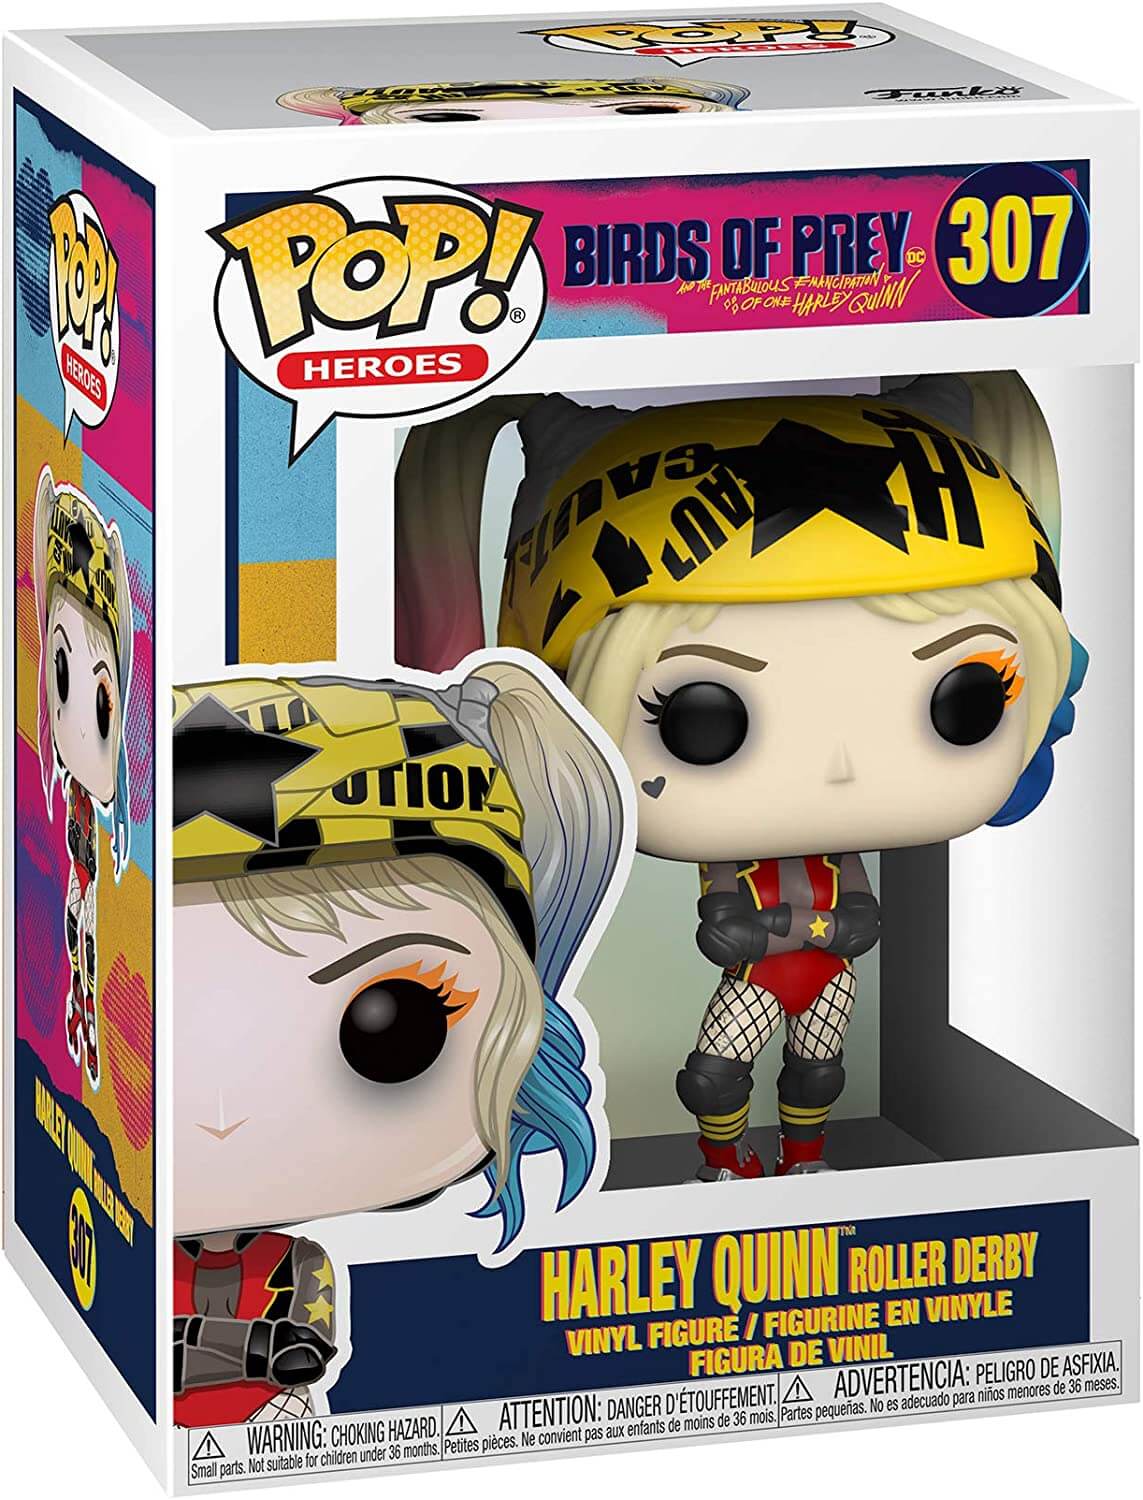 Фигурка Funko POP! Heroes: Birds of Prey - Harley Quinn (Roller Derby) фигурки funko pop birds of prey harley quinn and beaver 44378 2 шт